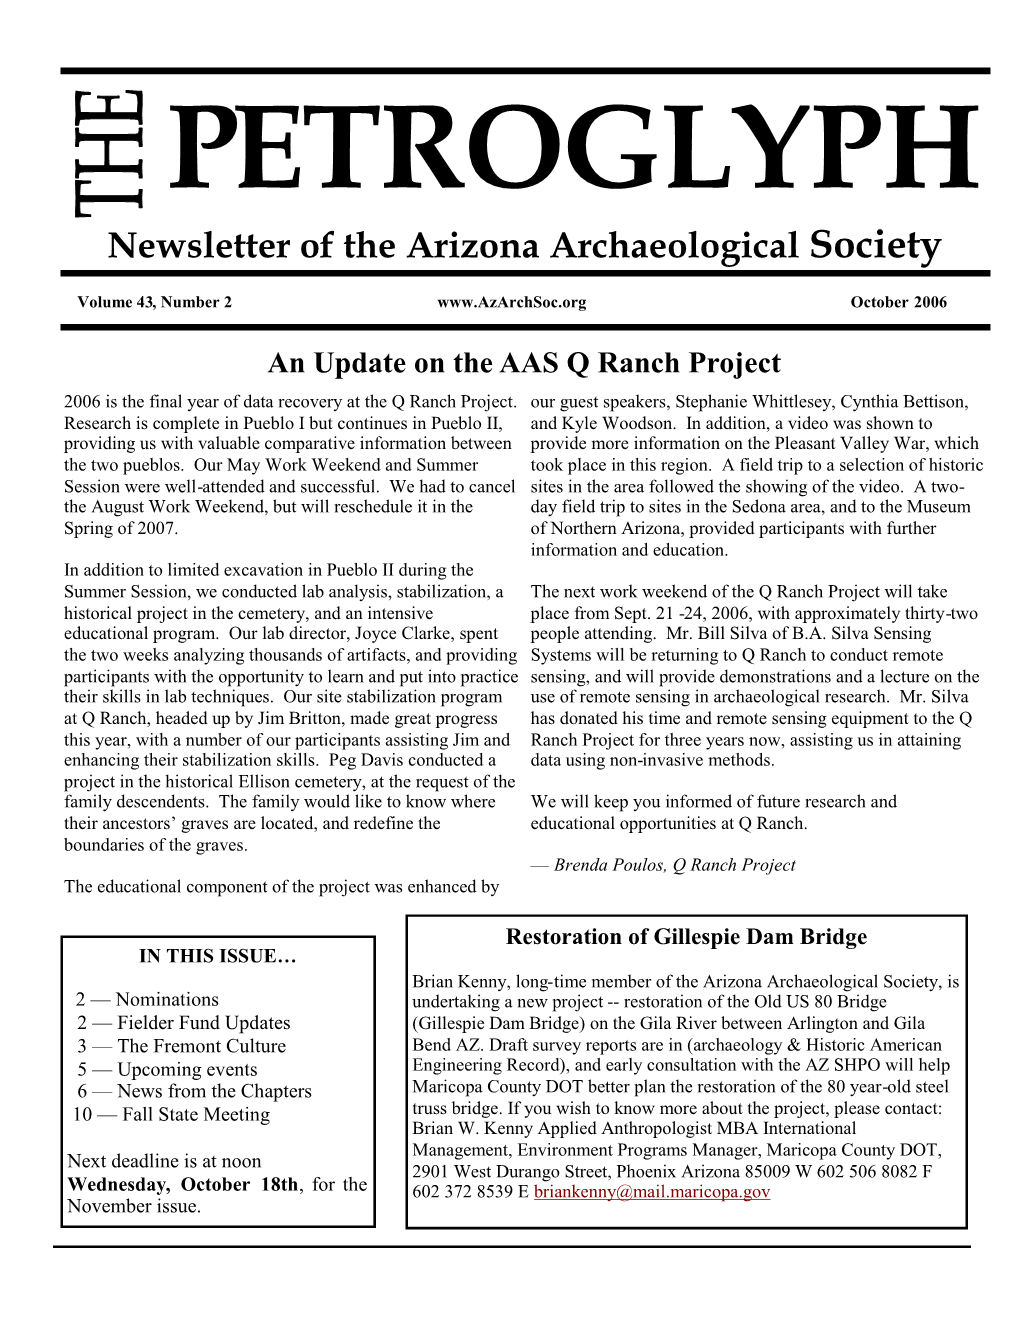 PETROGLYPH Newsletter of the Arizona Archaeological Society